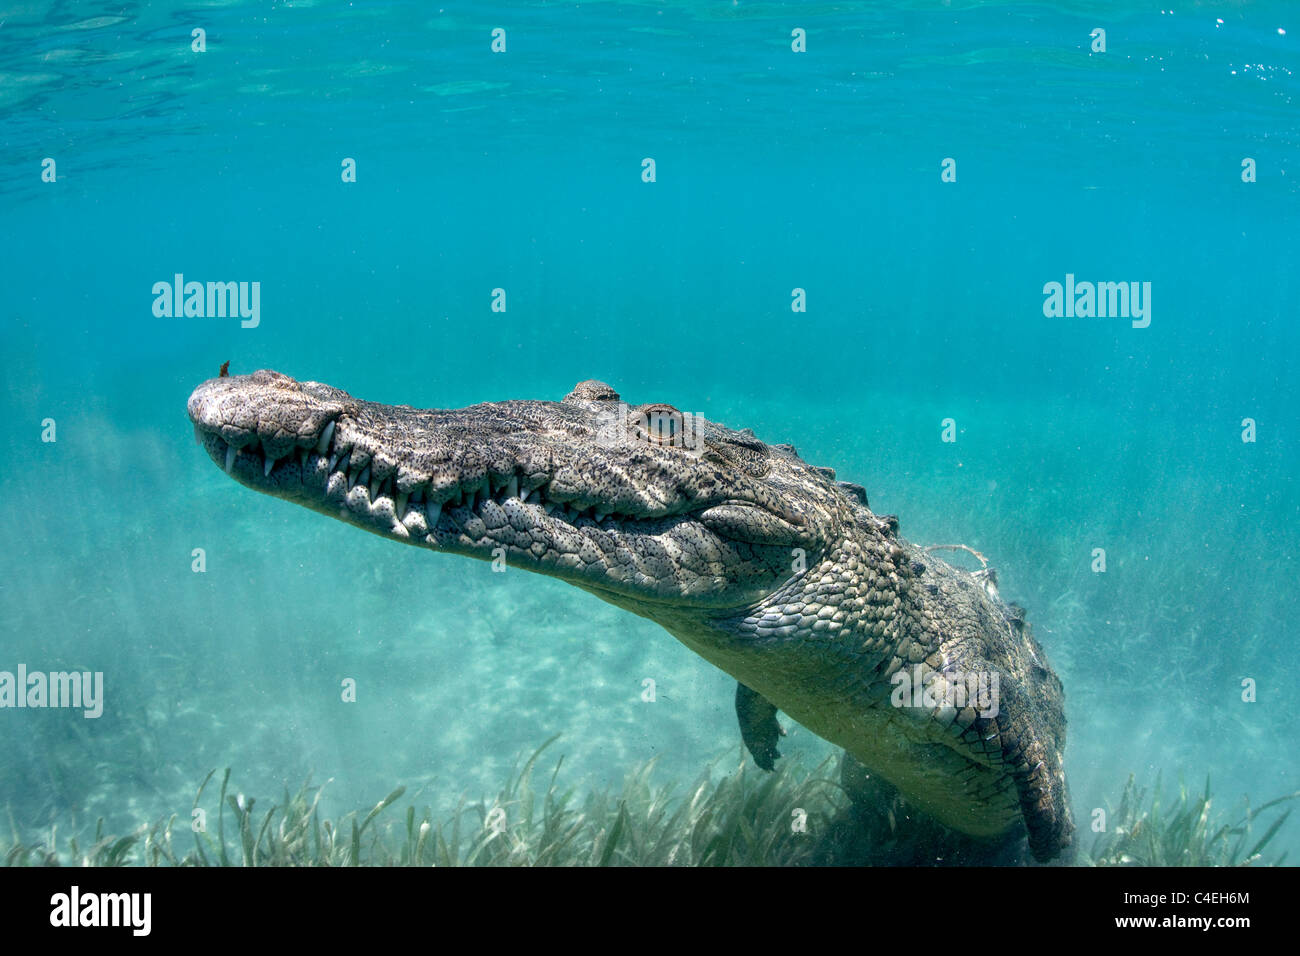 A Cuban Crocodile rests underwater off the coast of Cuba. Stock Photo